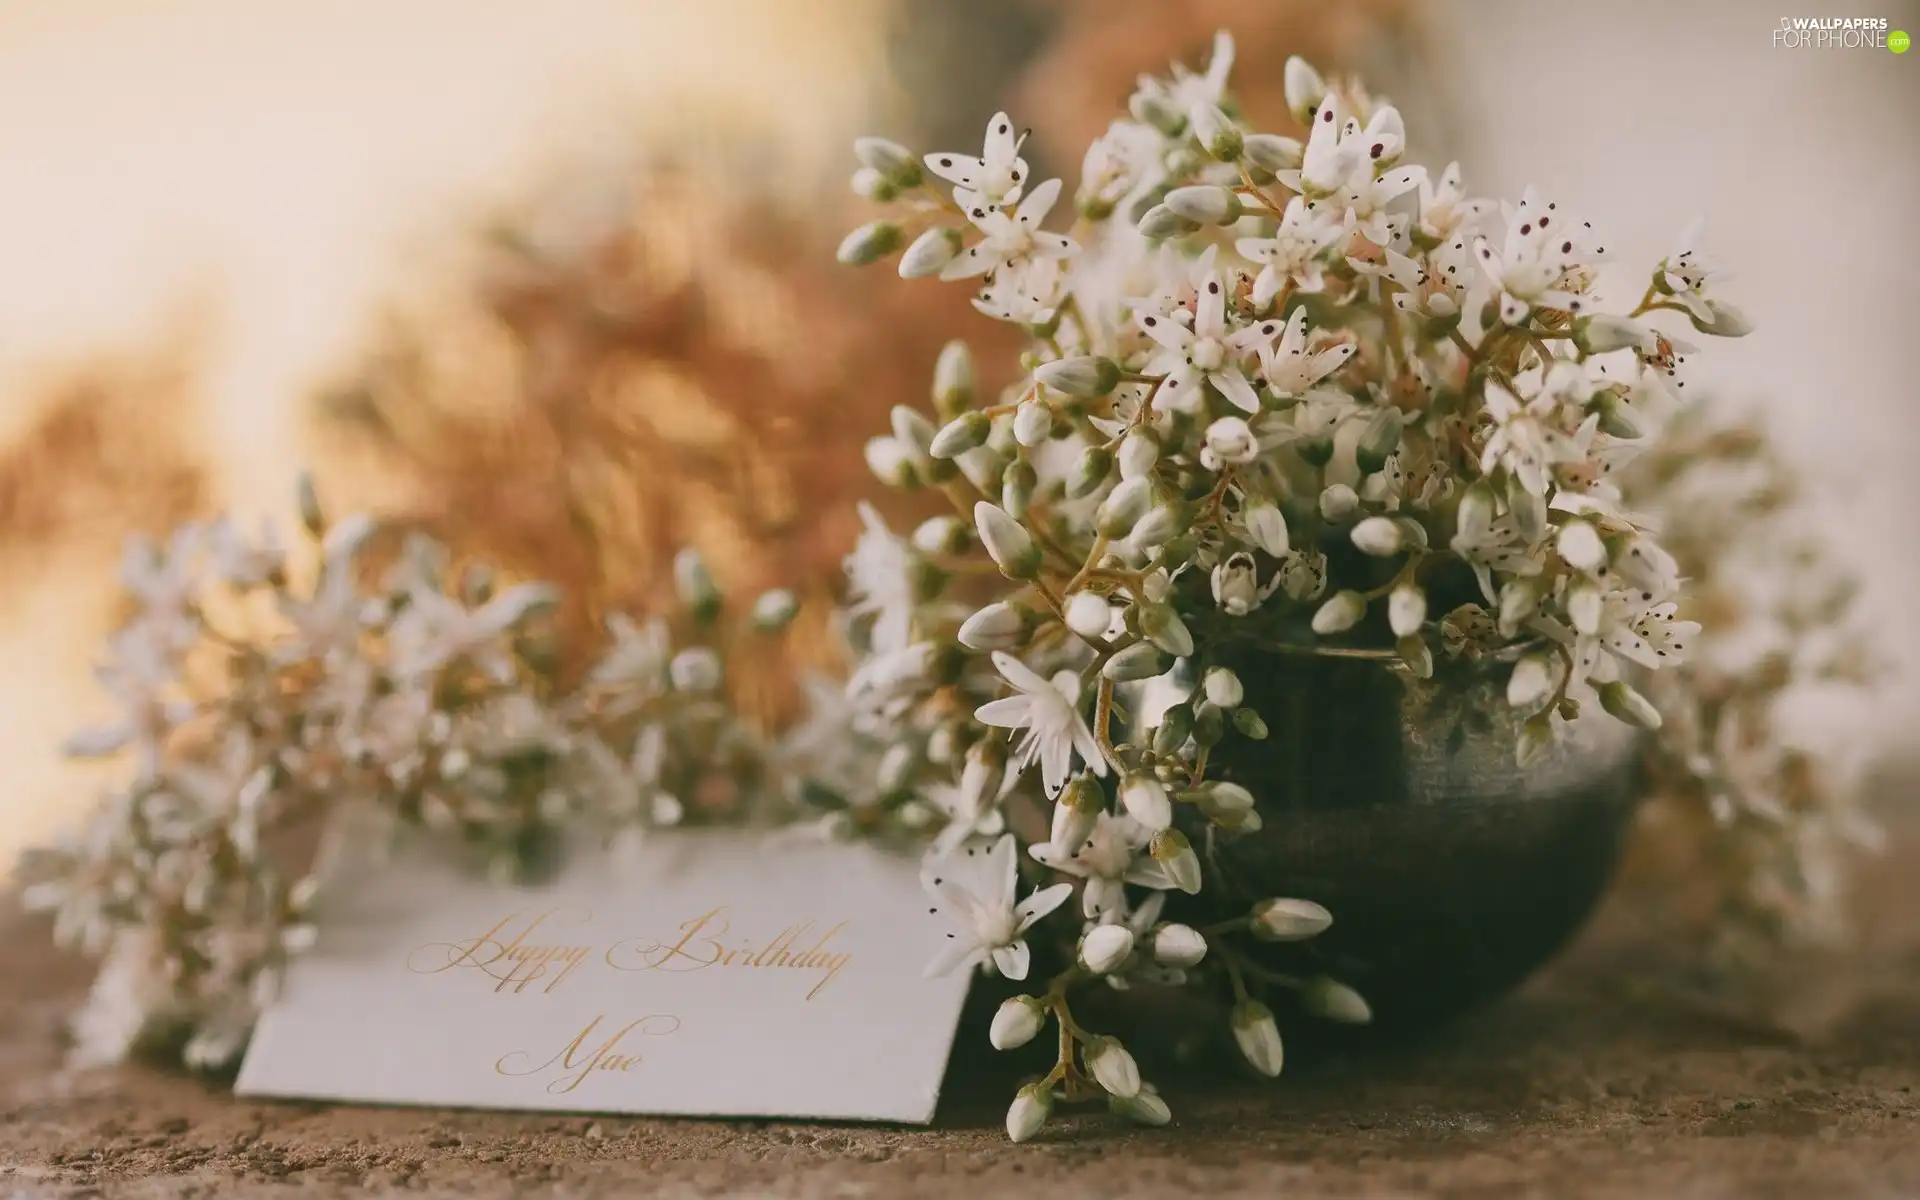 change, Vase, card, White, birthday, Flowers, Wishes